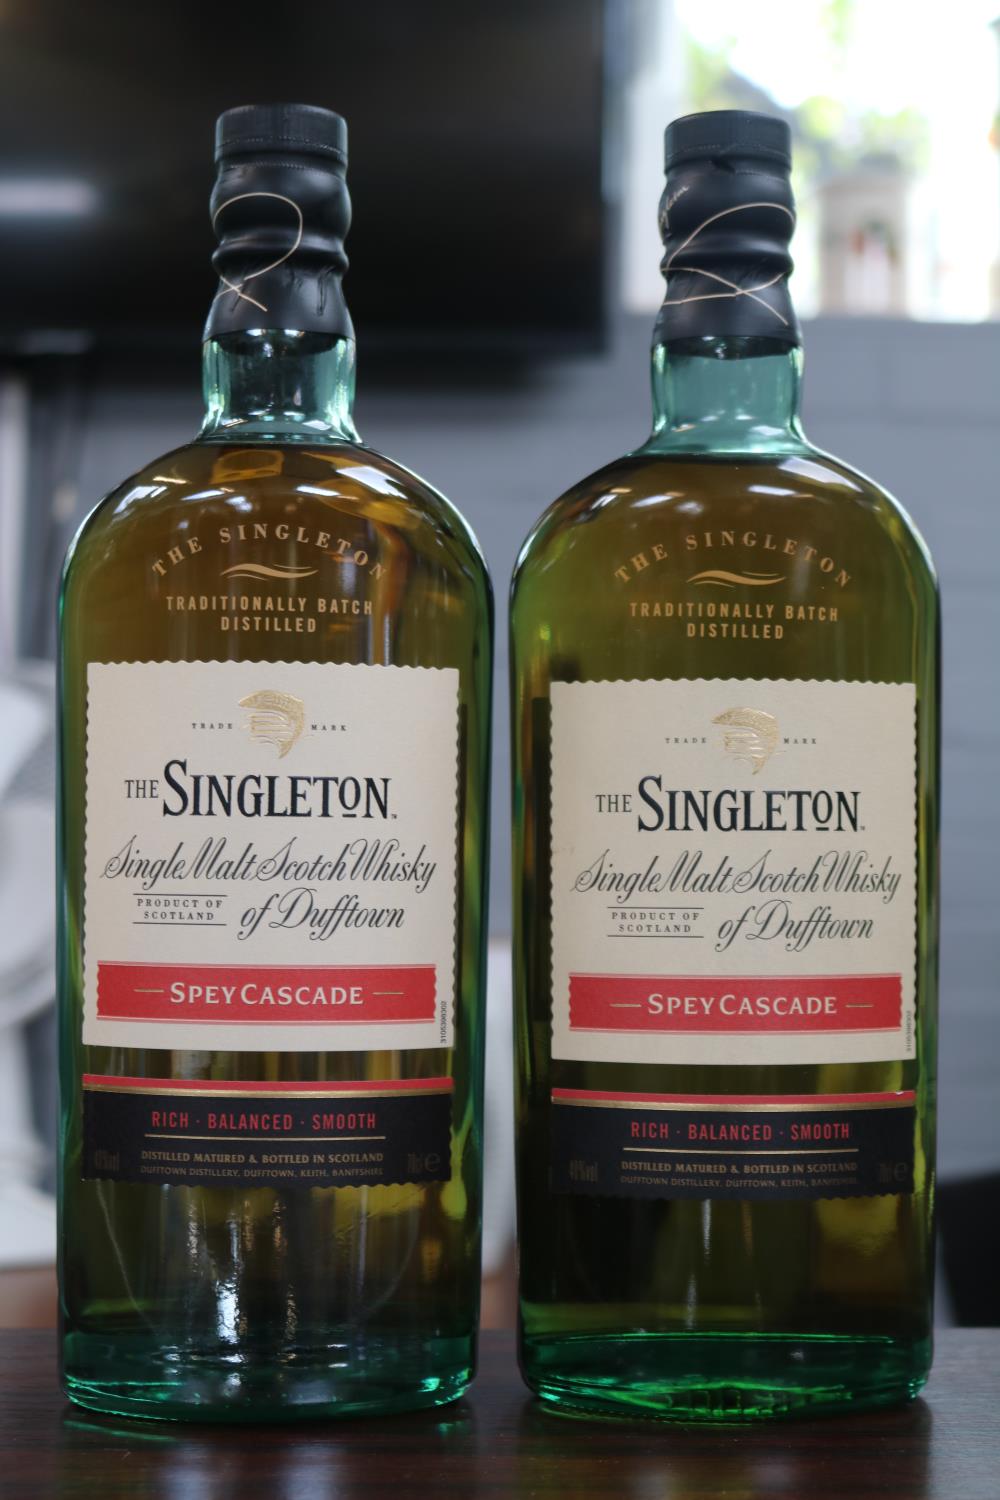 2 Bottles of The Singleton Single Malt Scotch Whisky of Dufftown Spey Cascade 70cl